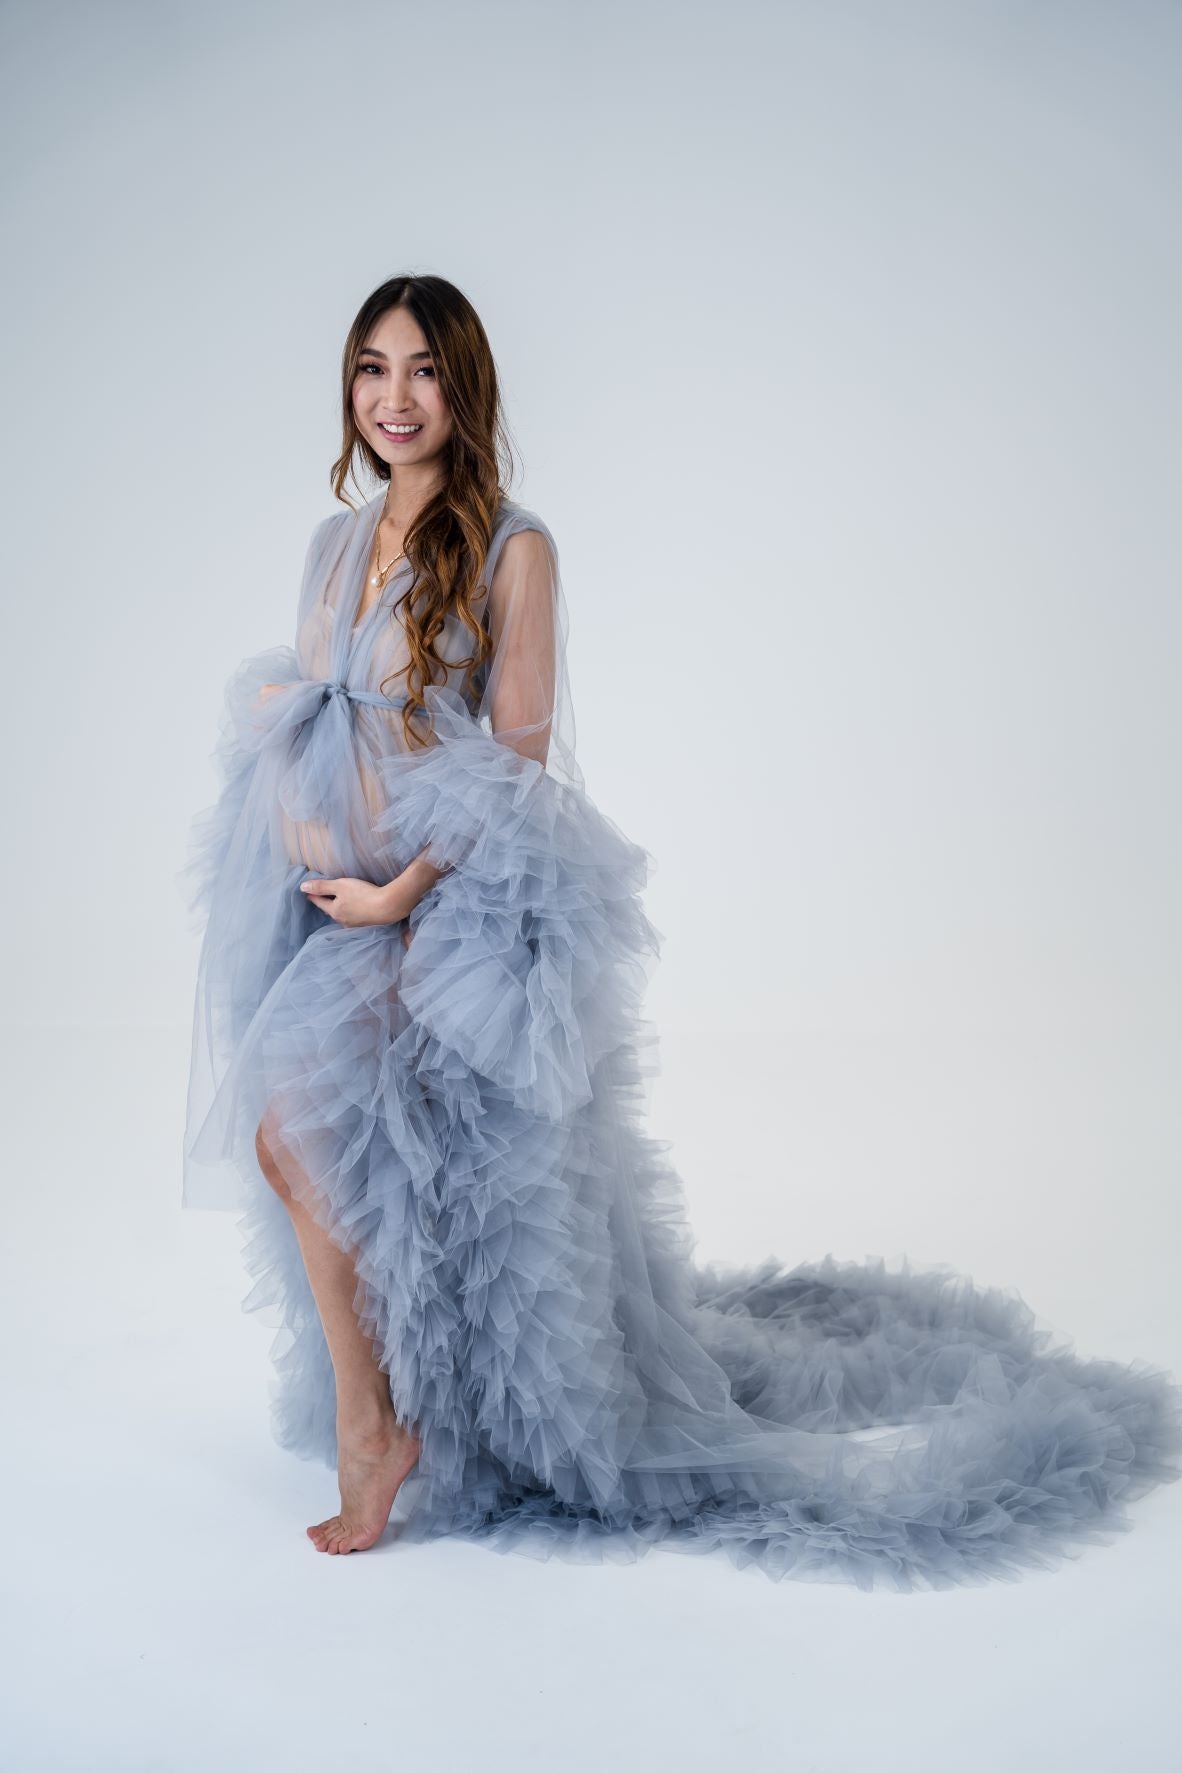 dresses for pregnancy photoshoot